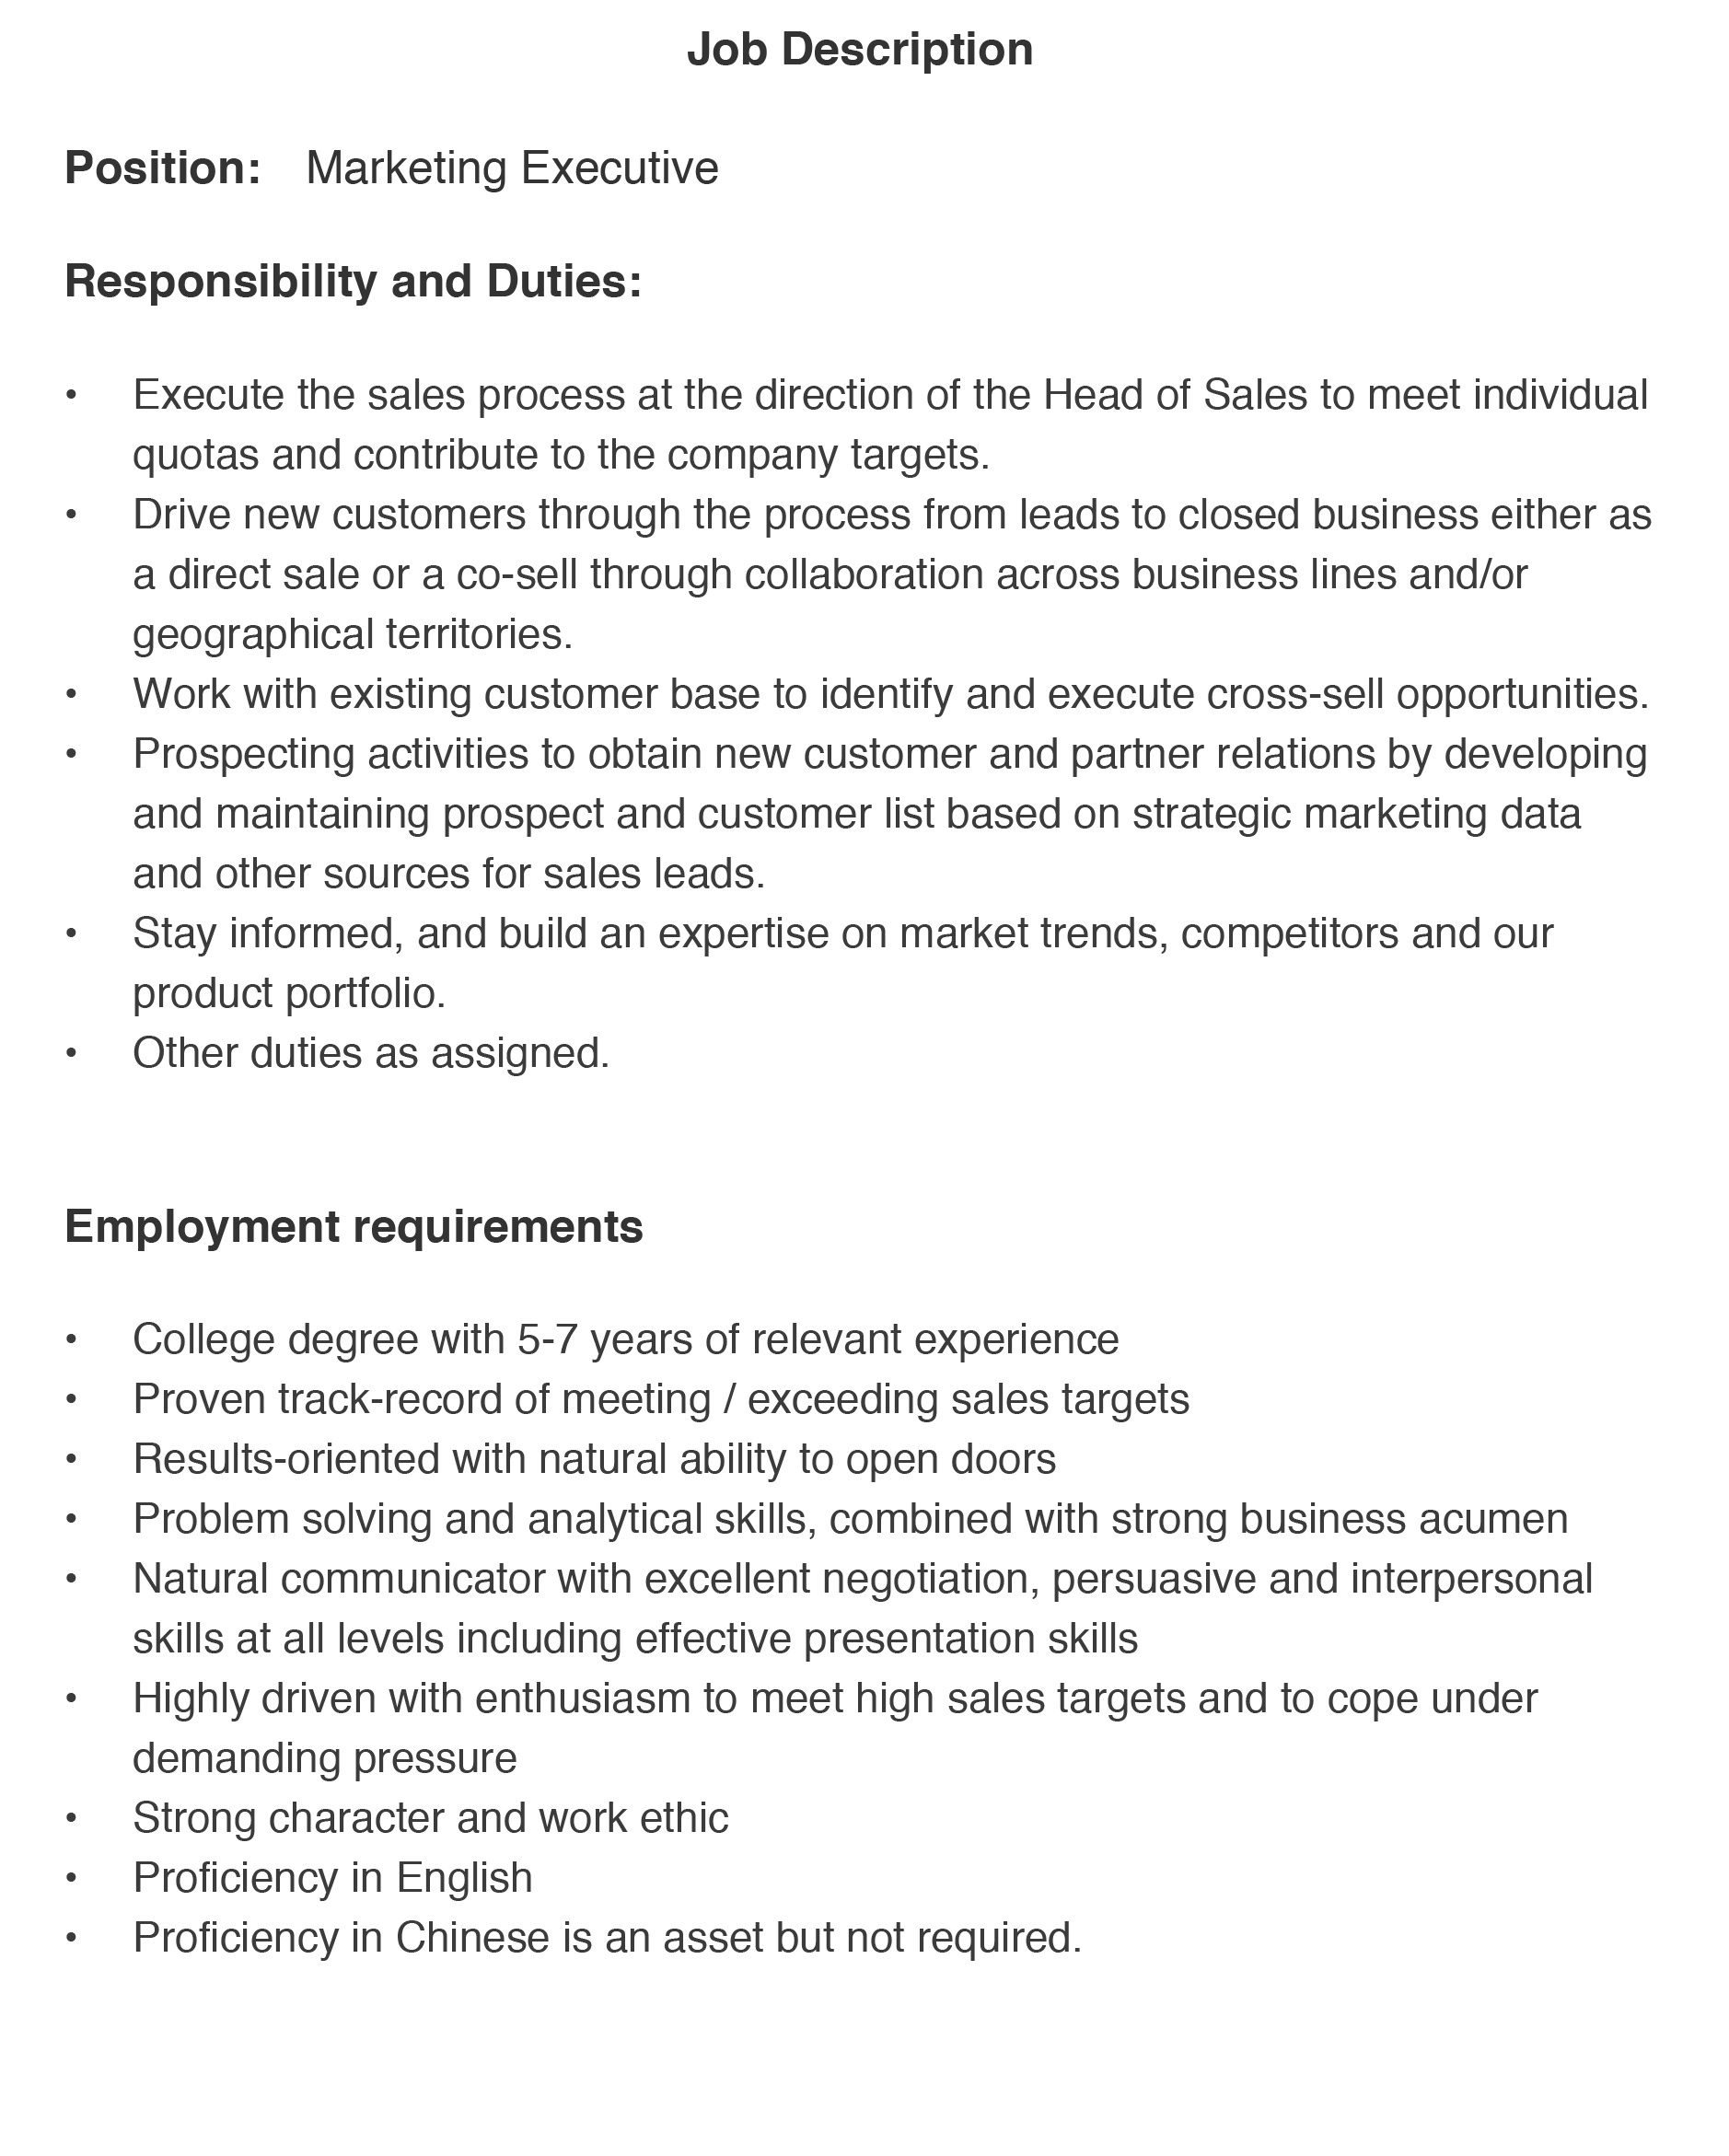 marketing executive job description in education sector